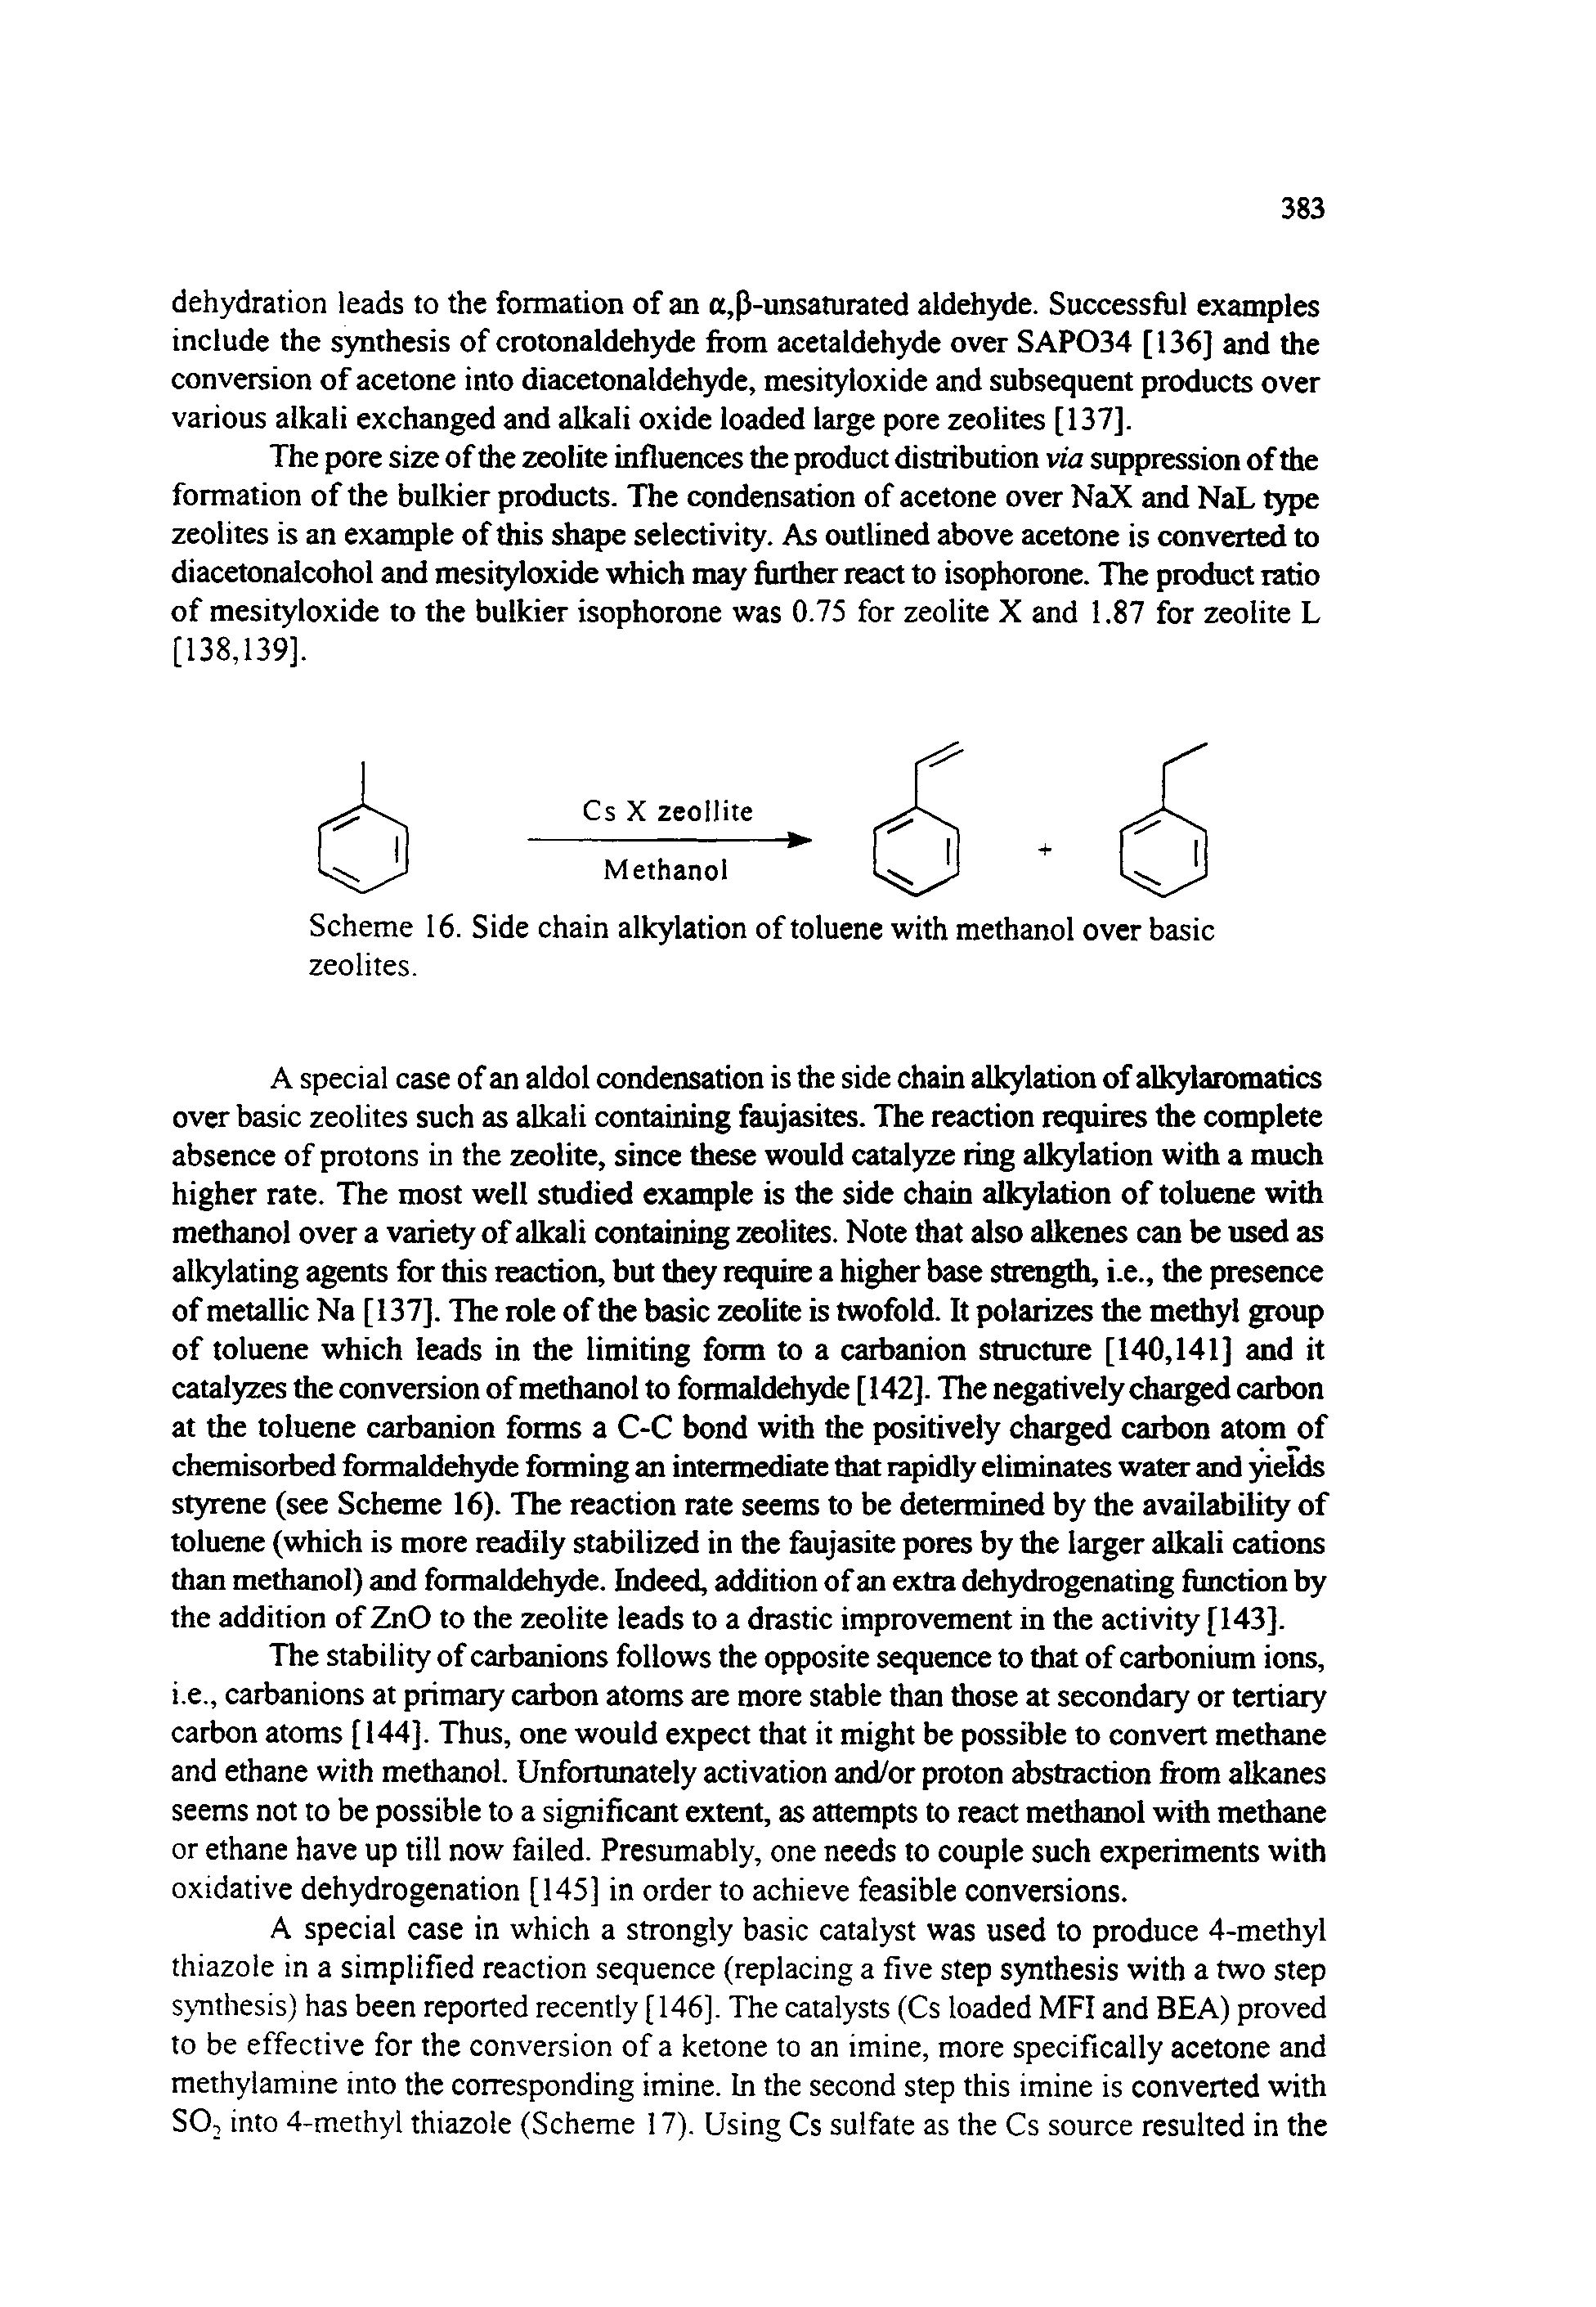 Scheme 16. Side chain alkylation of toluene with methanol over basic zeolites.